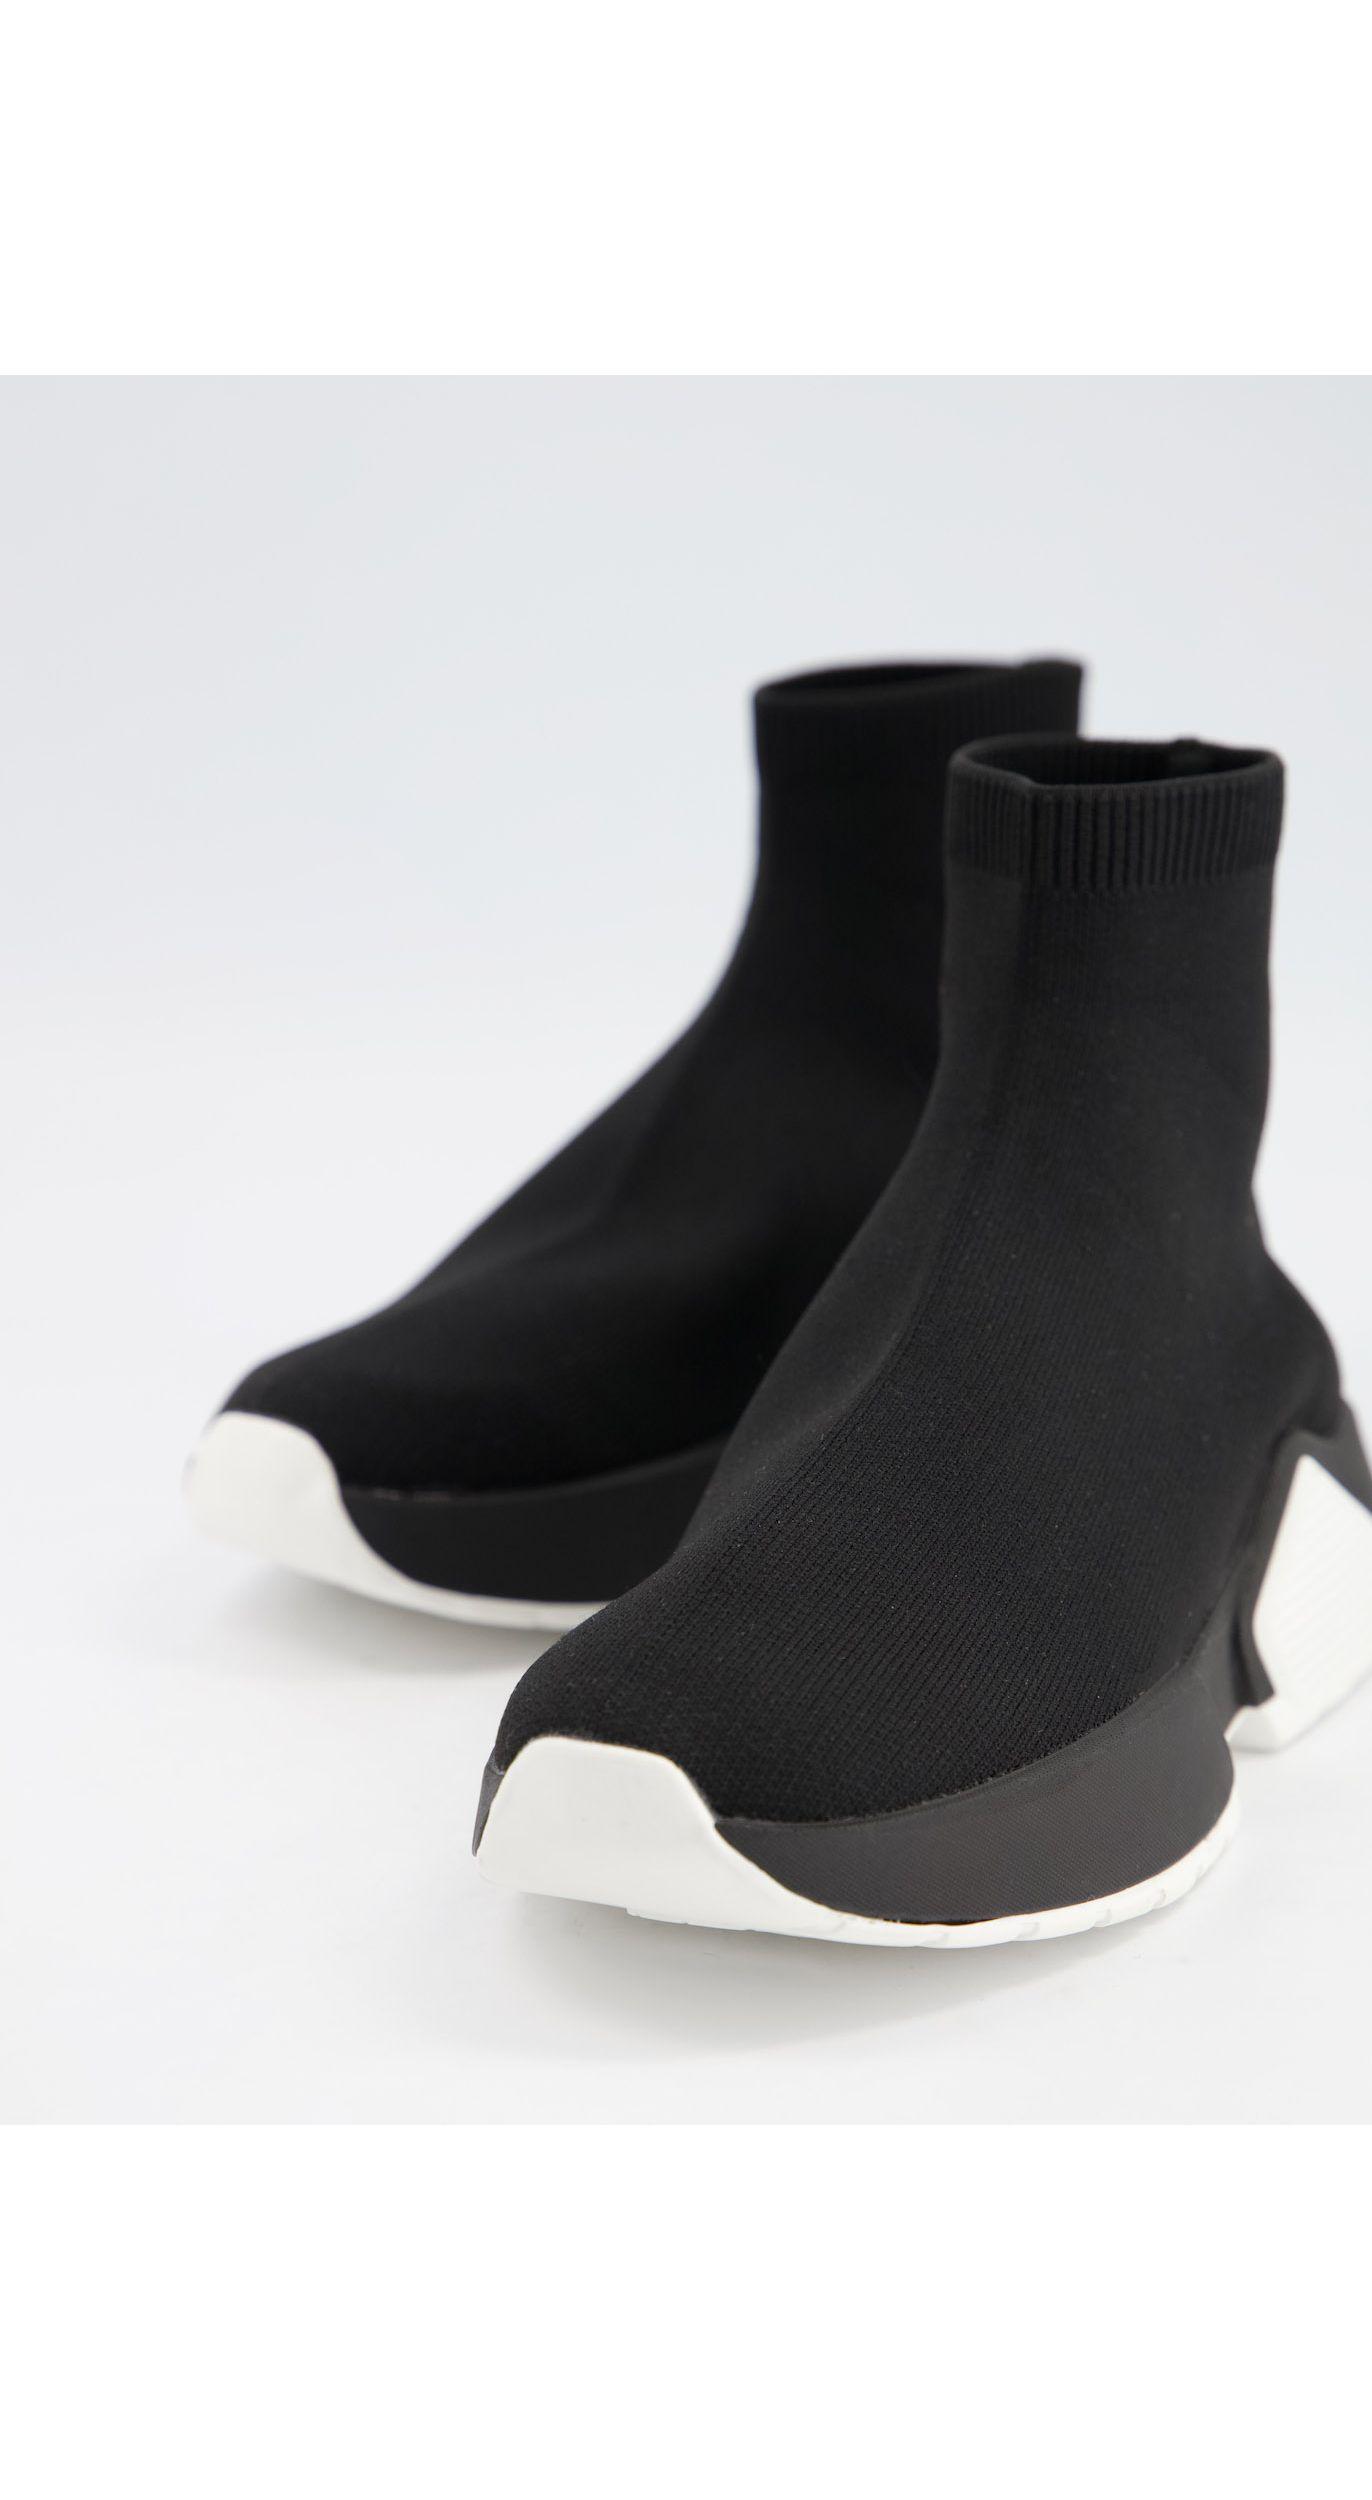 ASOS Della Sock Sneakers in Black - Lyst